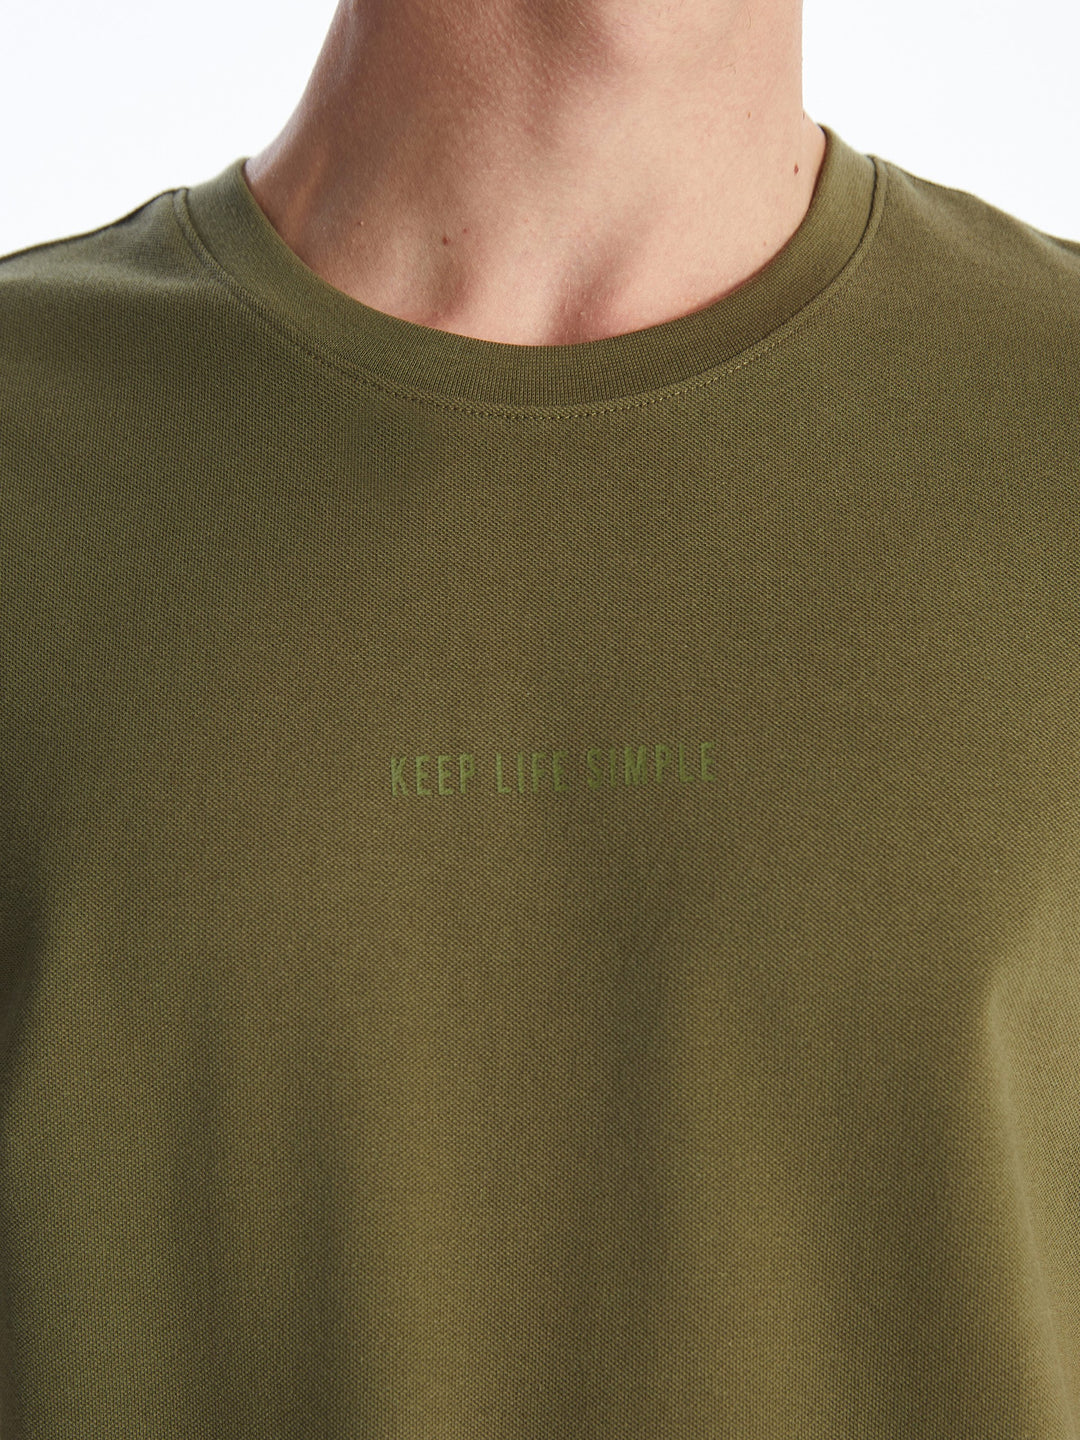 Crew Neck Short Sleeve Printed Men T-Shirt